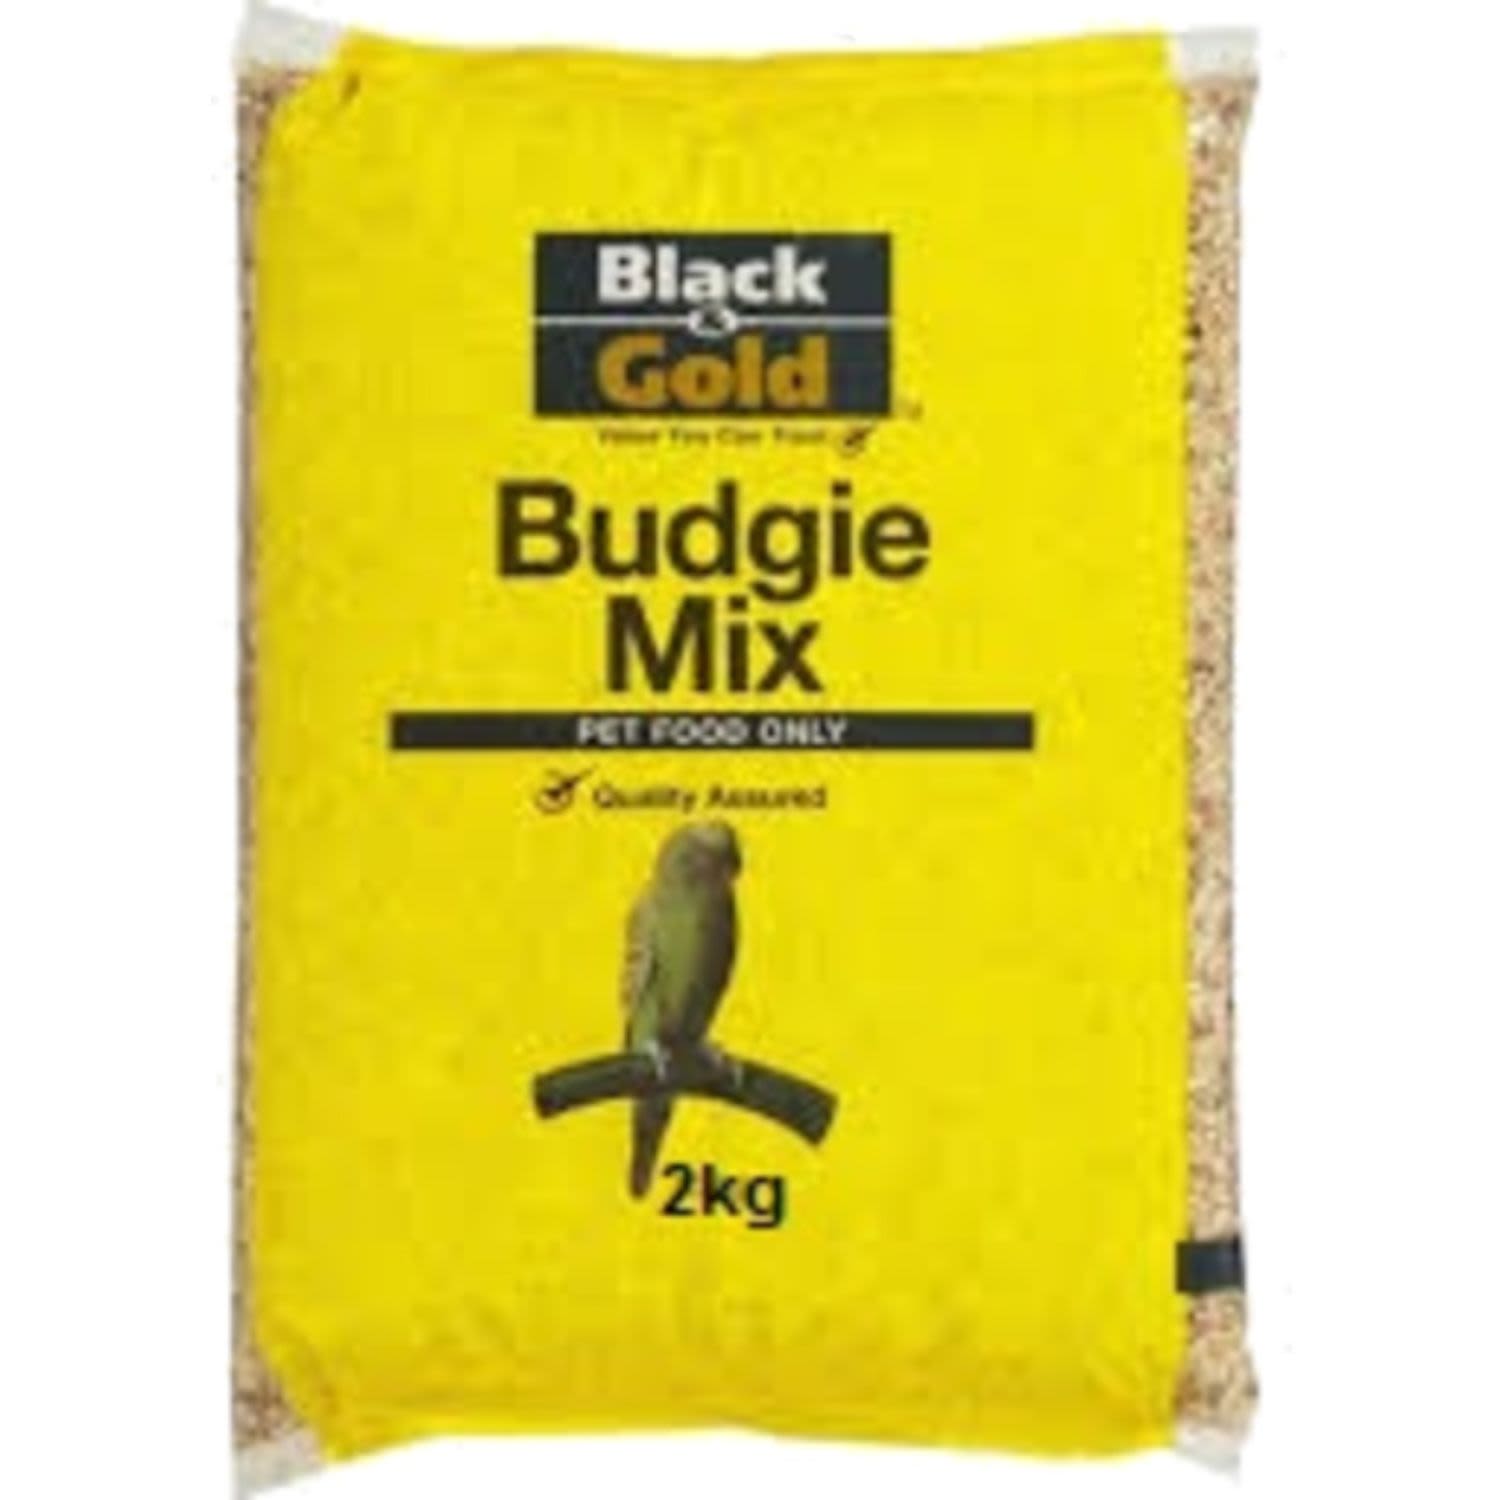 Black & Gold Budgie Mix, 2 Kilogram